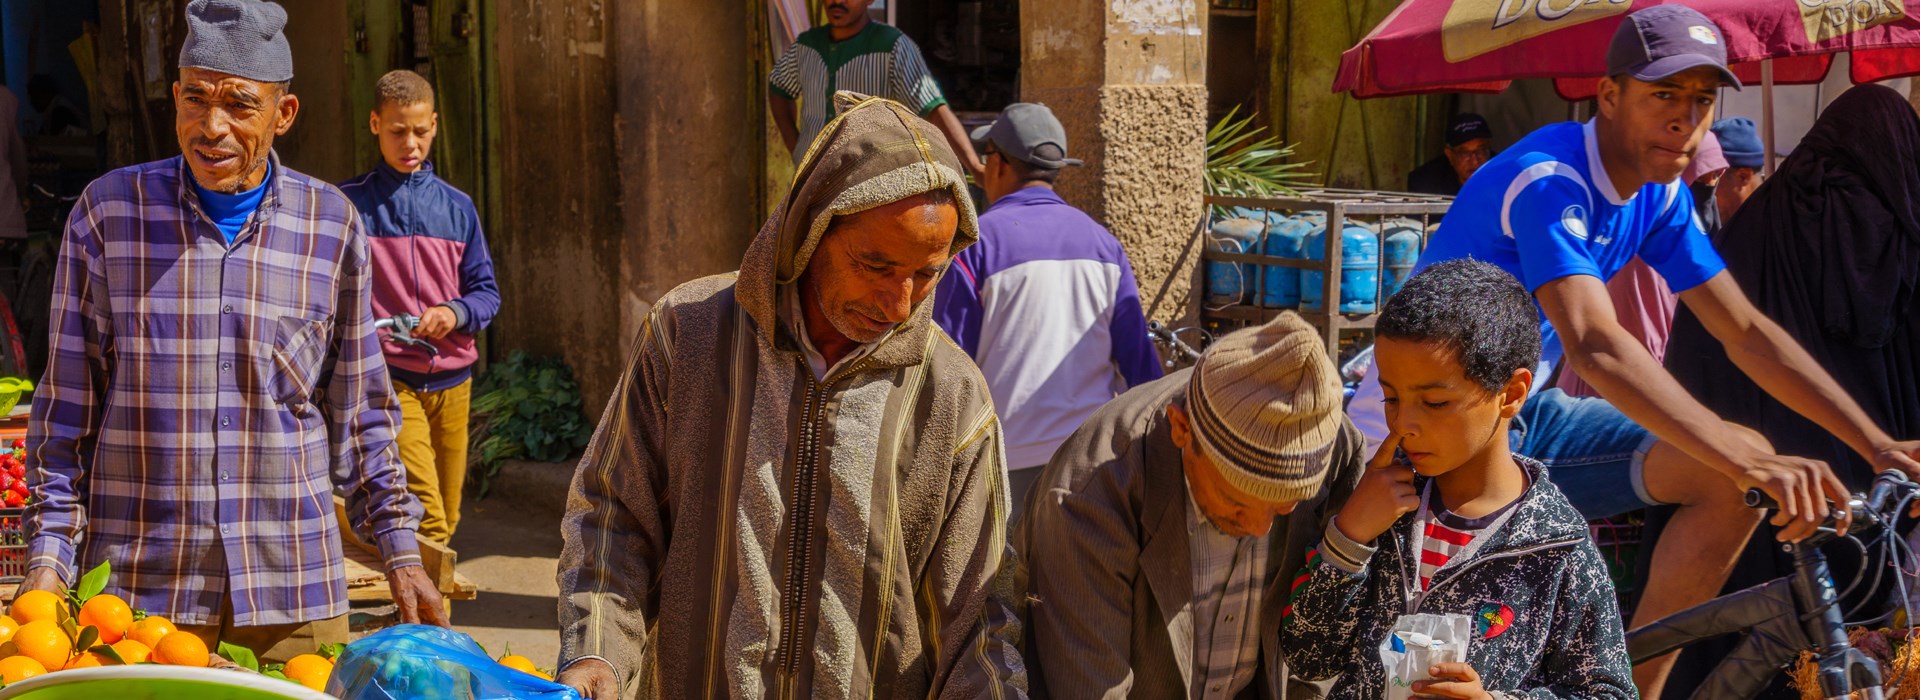 Visiter Rissani  - Maroc